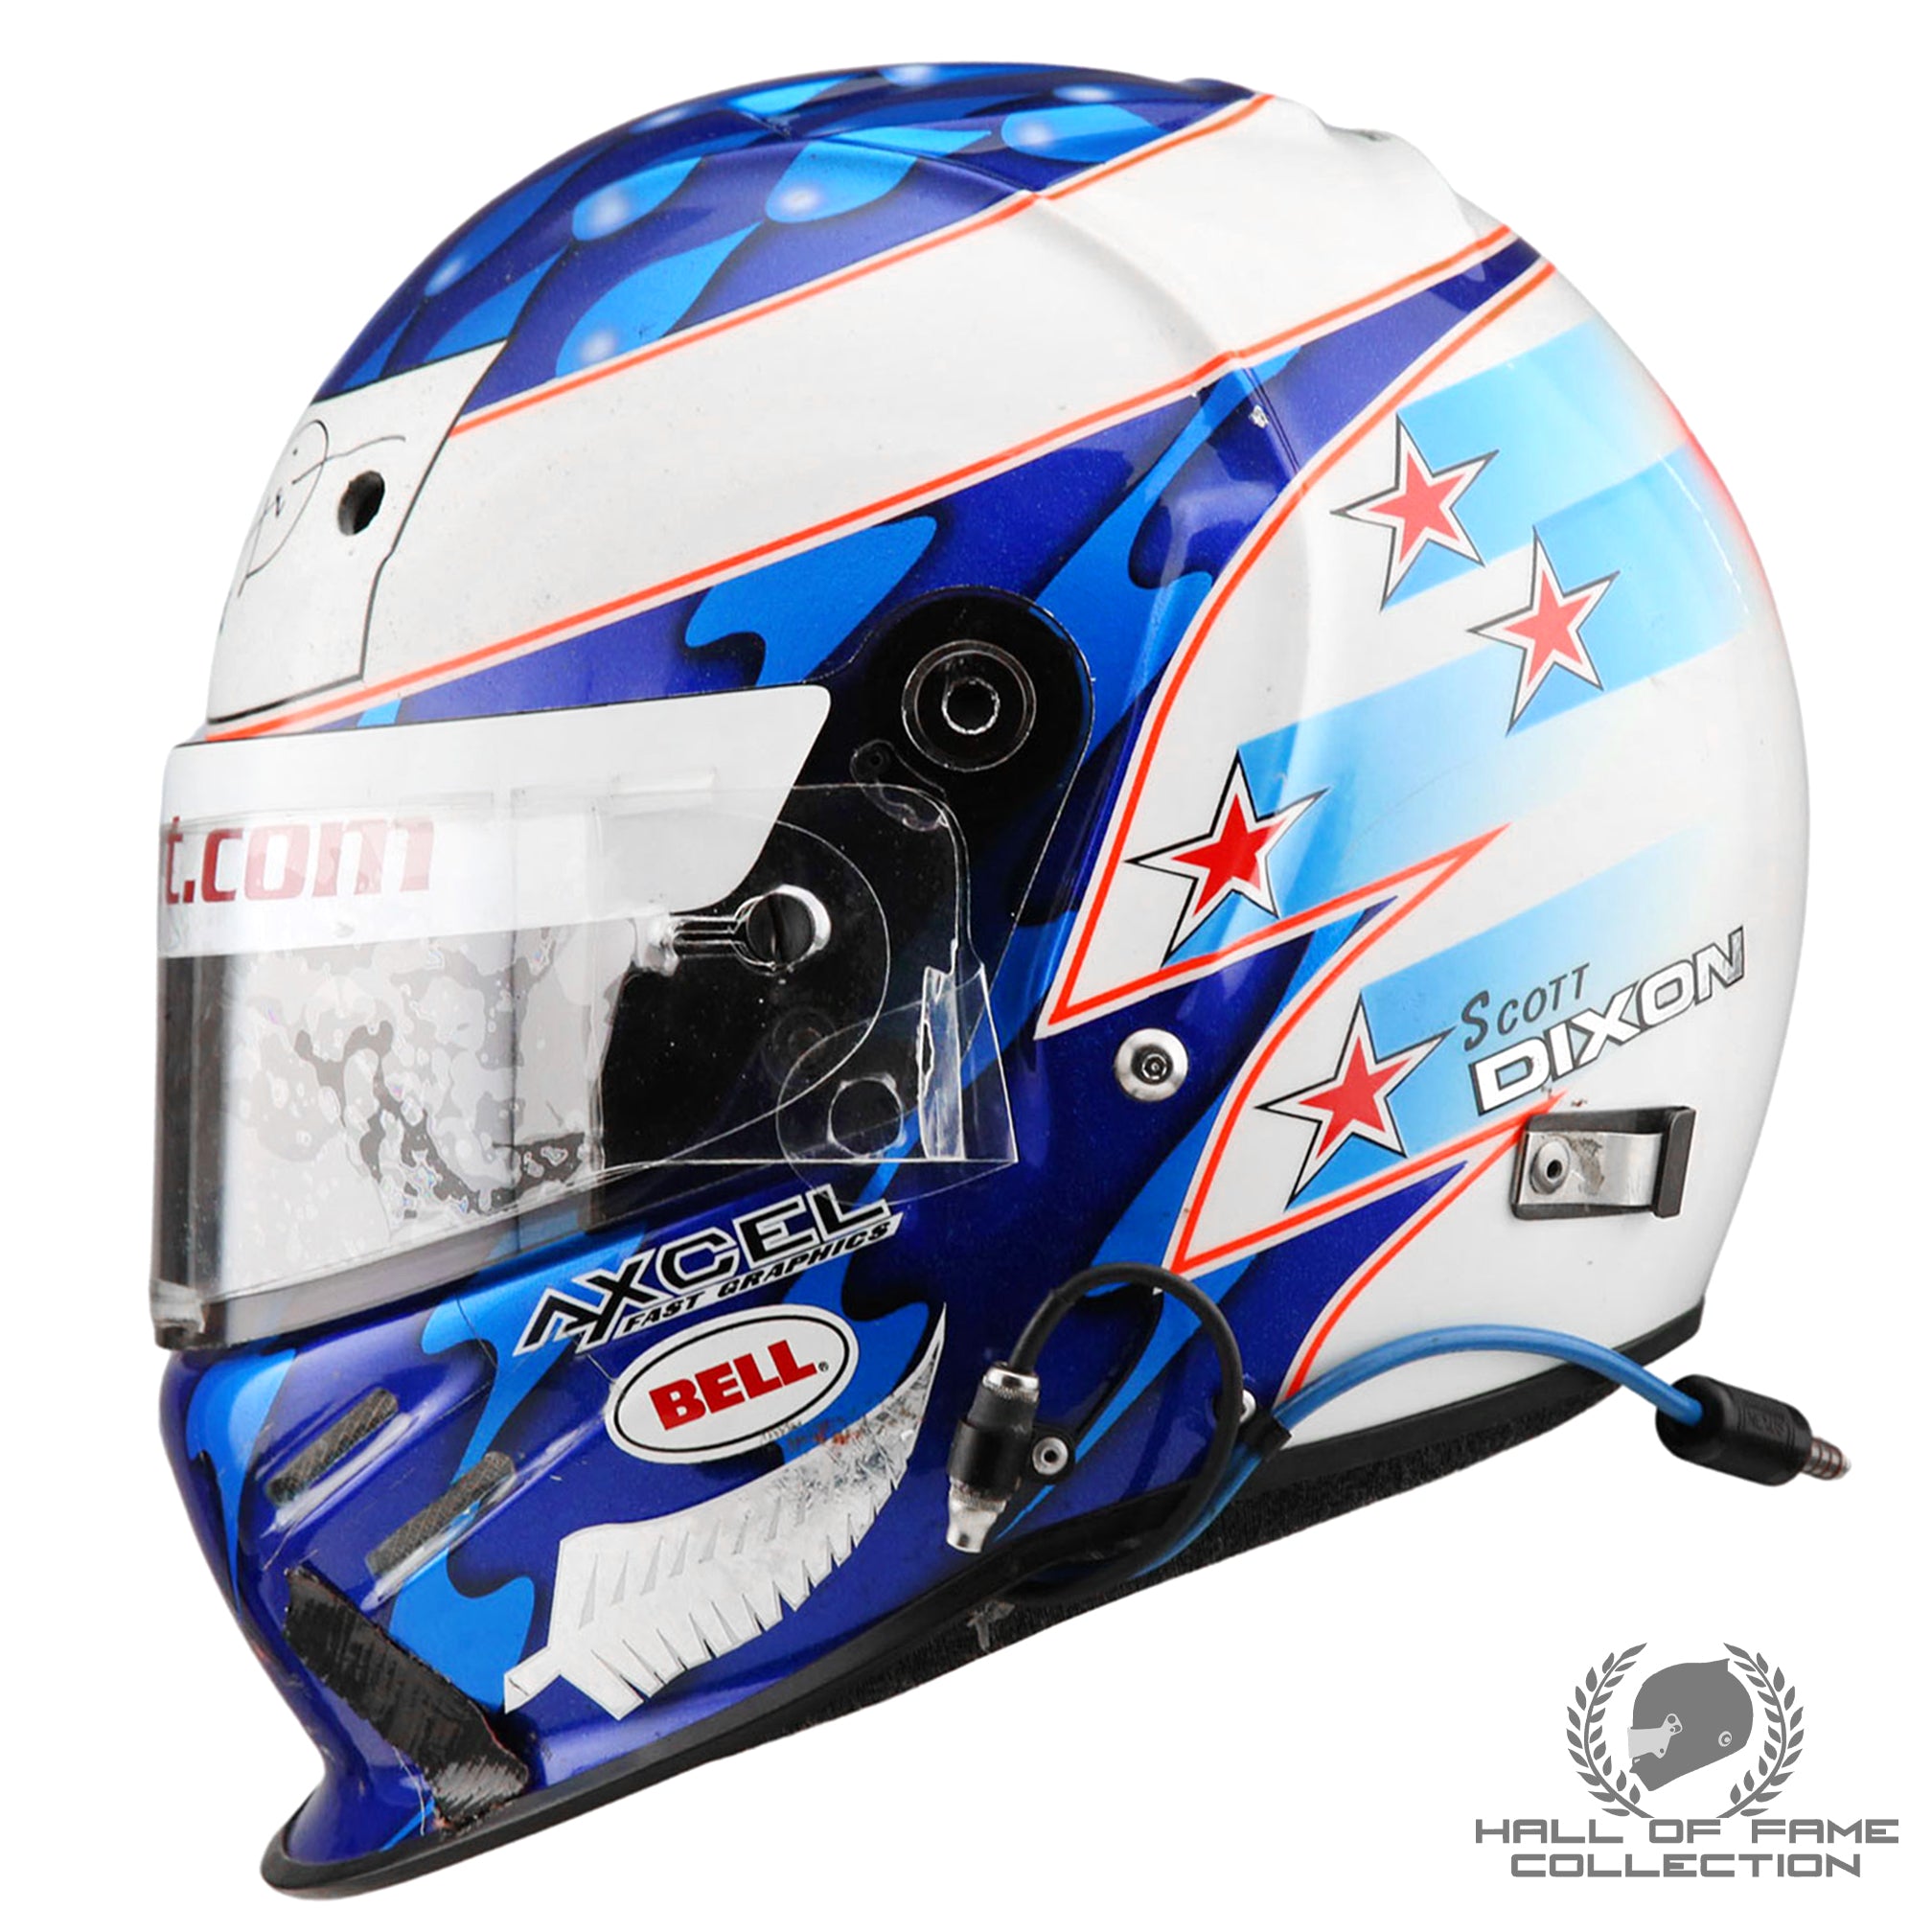 2002 Scott Dixon Signed PWR / Chip Ganassi Race Used CART Helmet